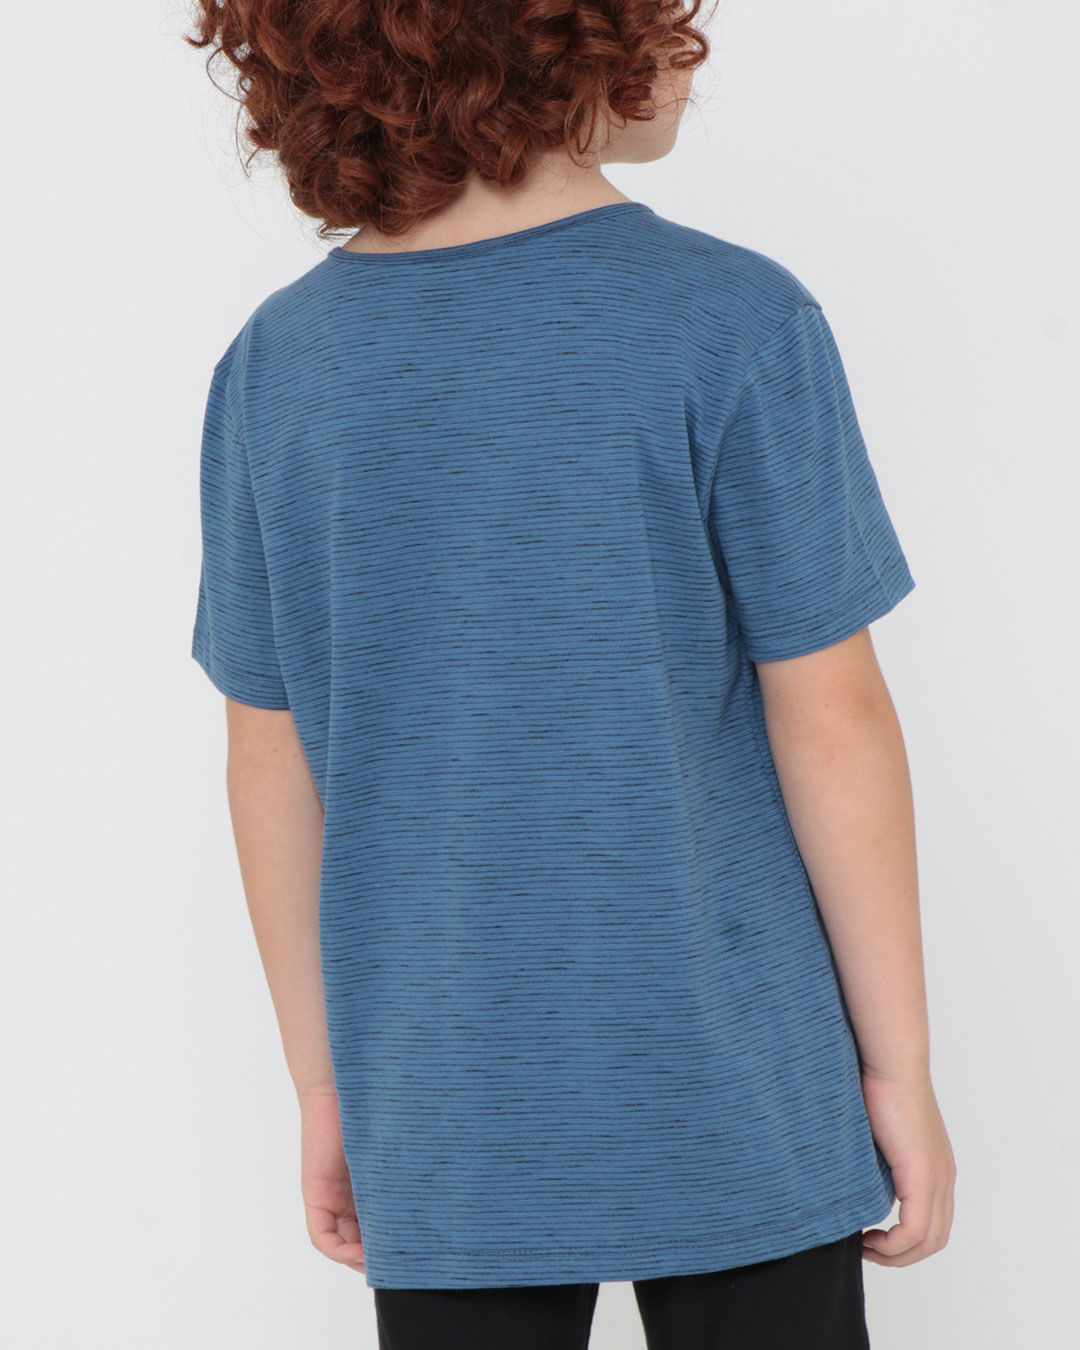 Camiseta-101102-Mc-M410-Listra---Azul-Escuro